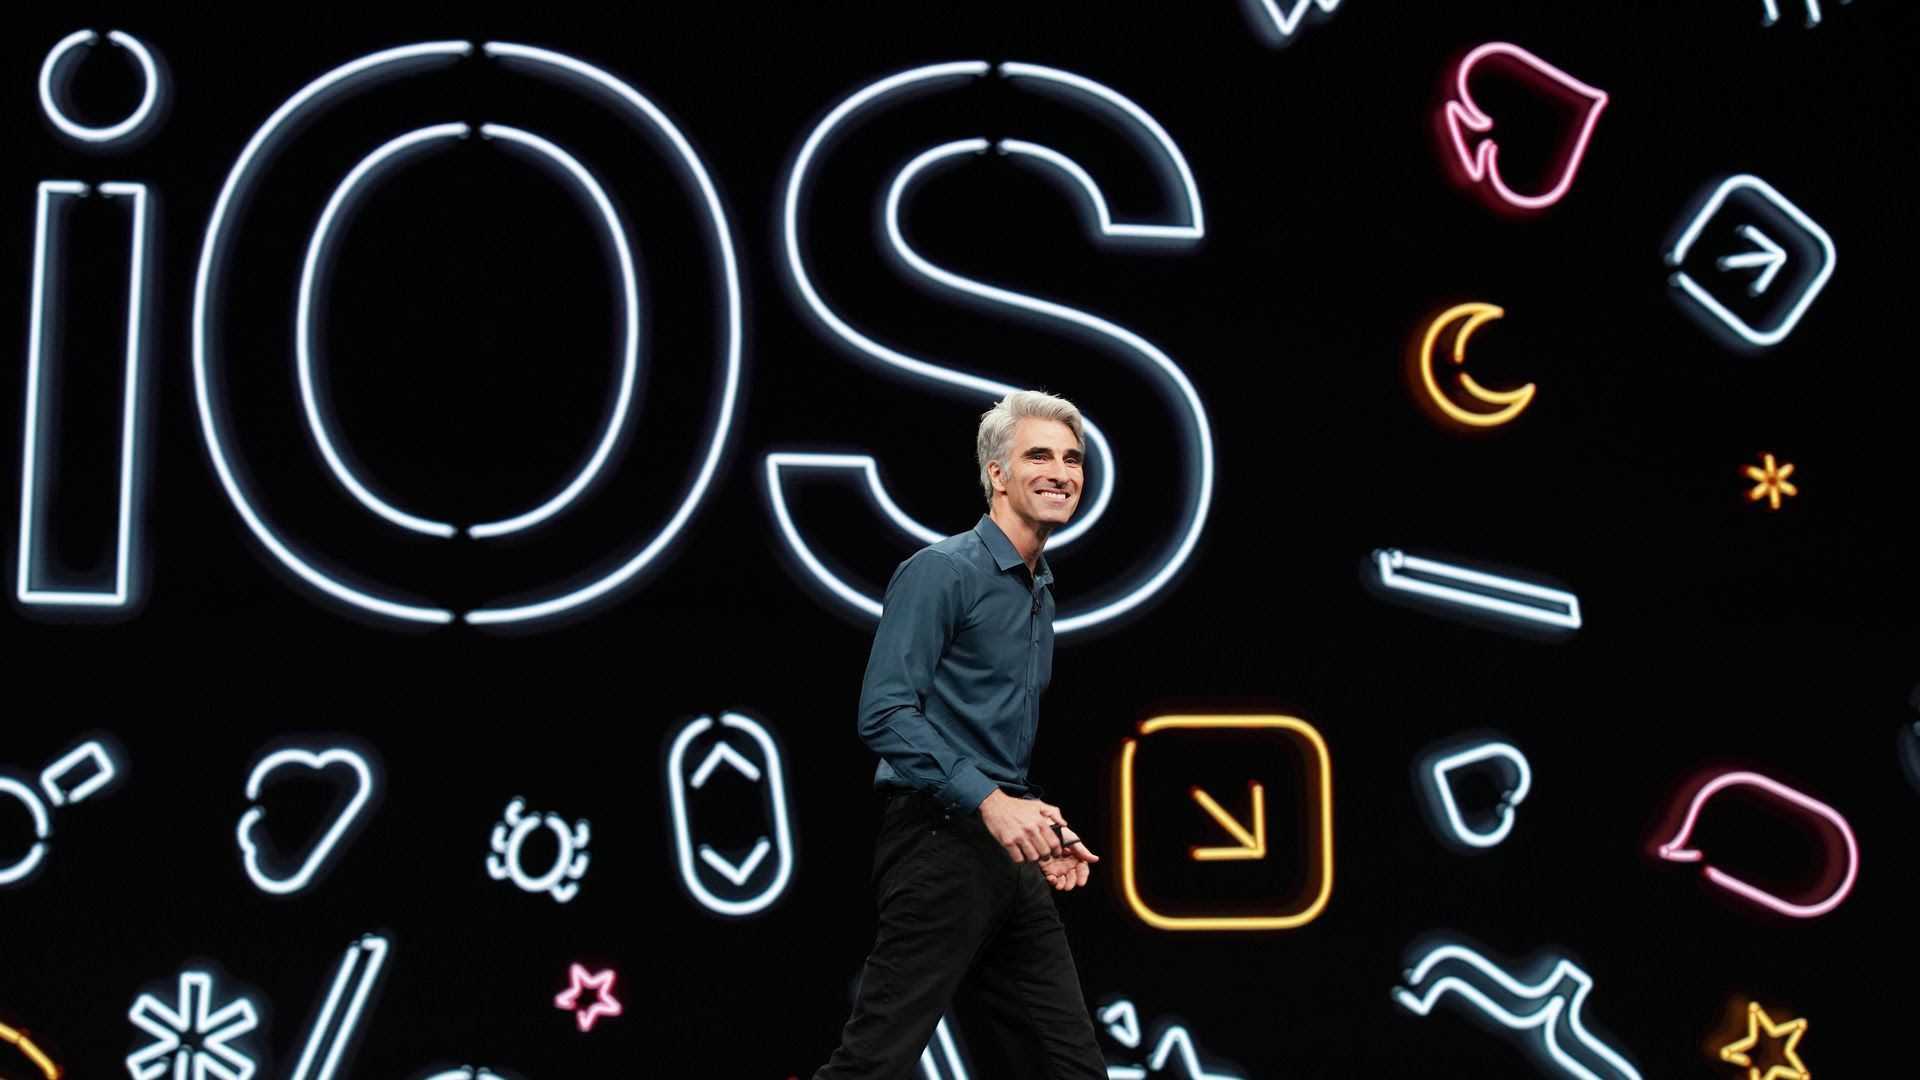 Craig Federighi unveiling iOS 13 at WWDC 2019. Photo: Apple